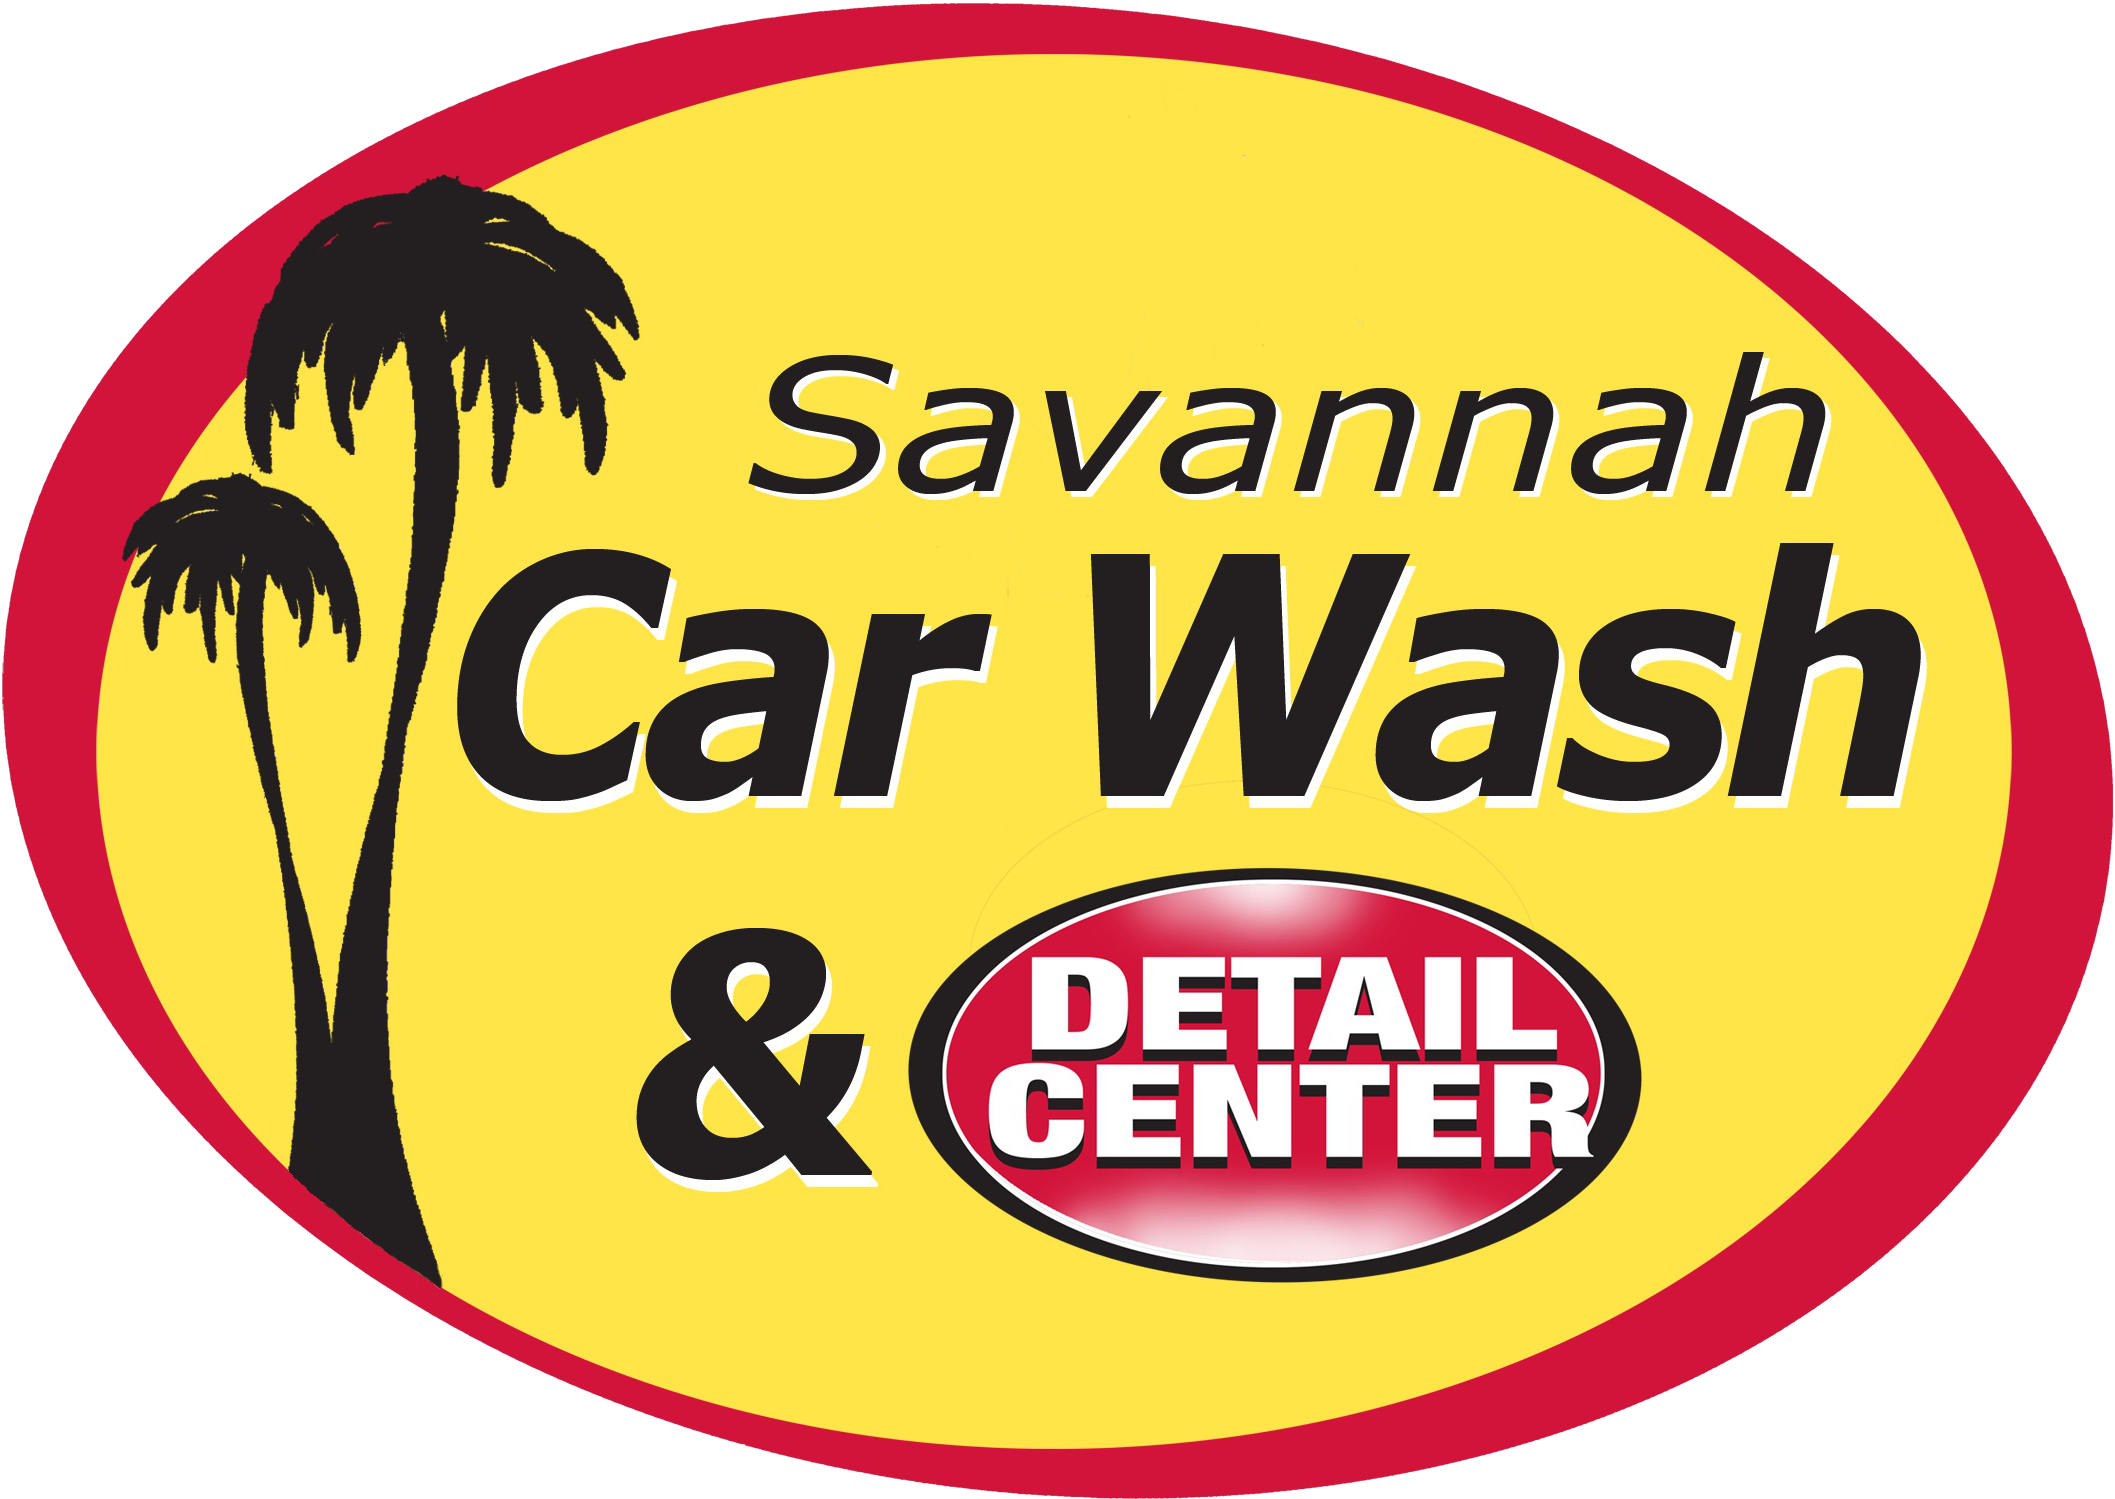 Car Washes - Savannah Car Wash (2400x1800)